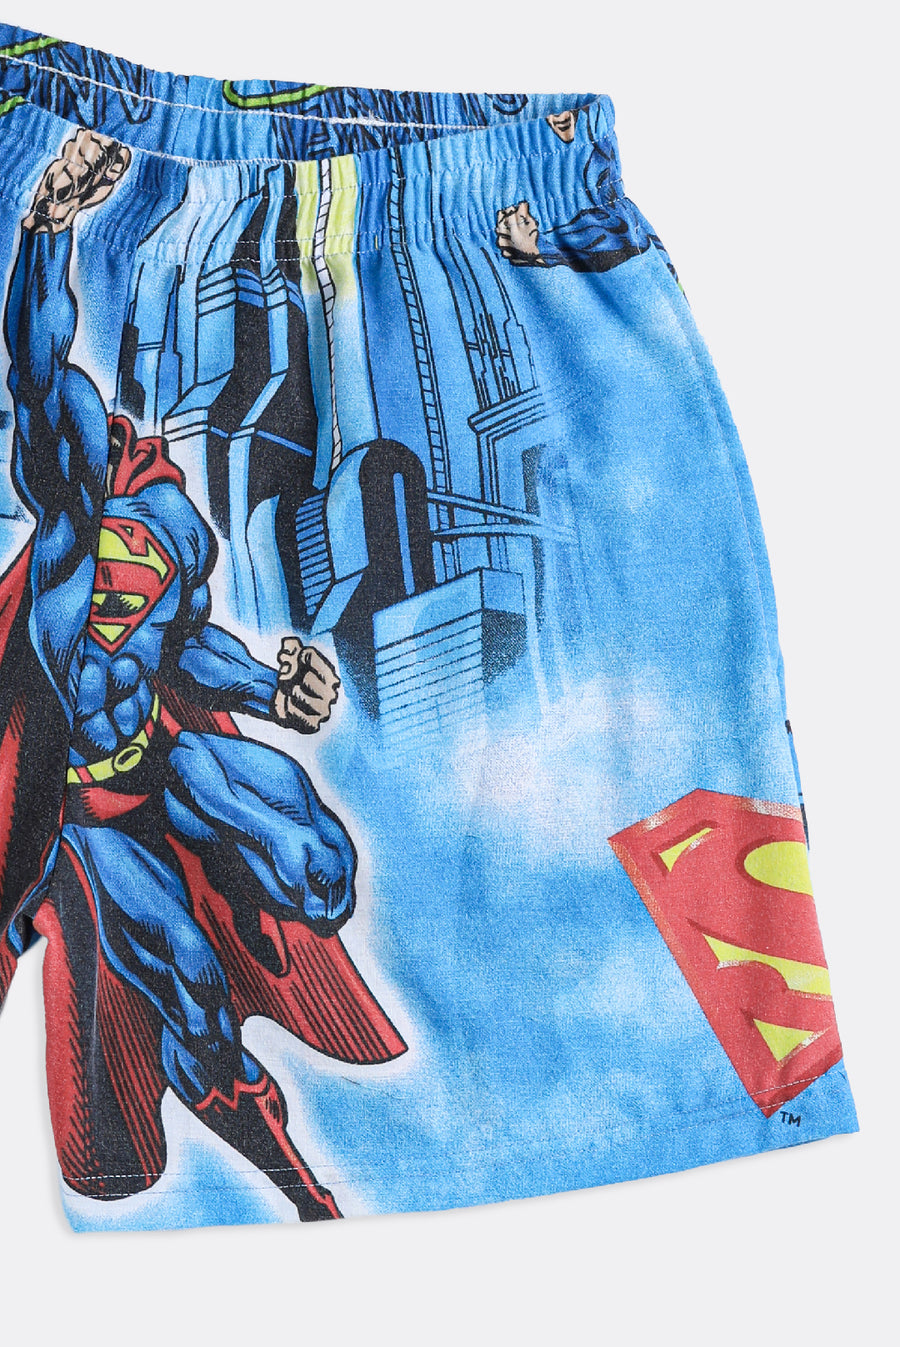 Unisex Rework Superman Boxer Shorts - XS, S